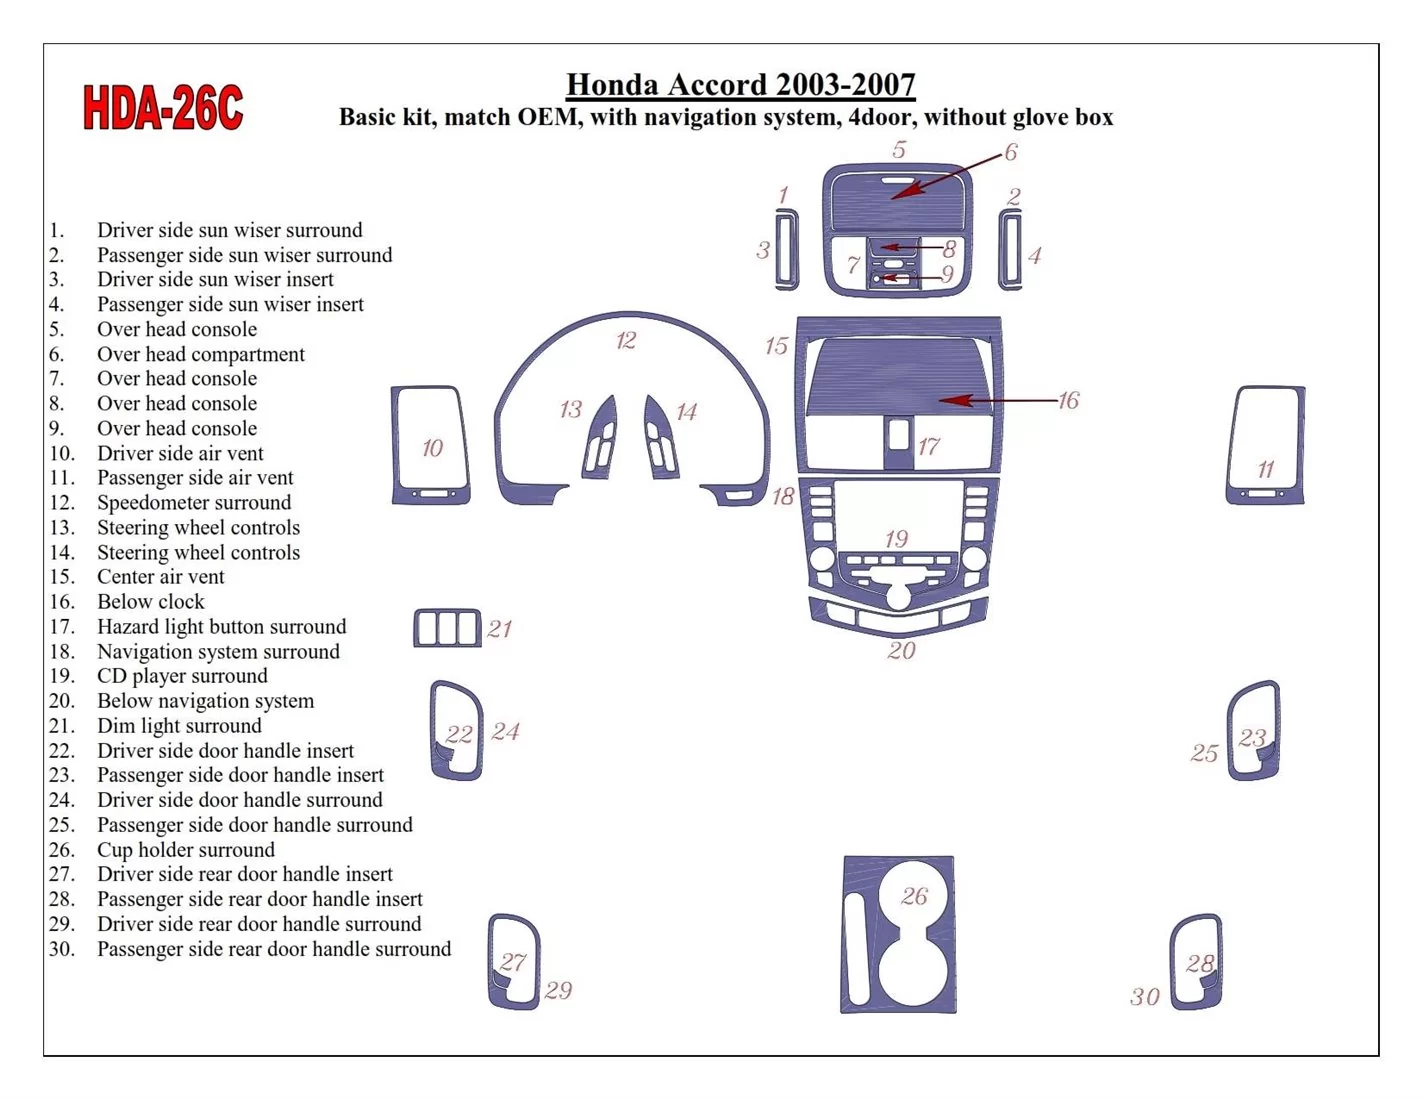 Honda Accord 2003-2007 Basic Set, OEM Compliance, With NAVI system, Without glowe-box, 4 Doors Decor de carlinga su interior